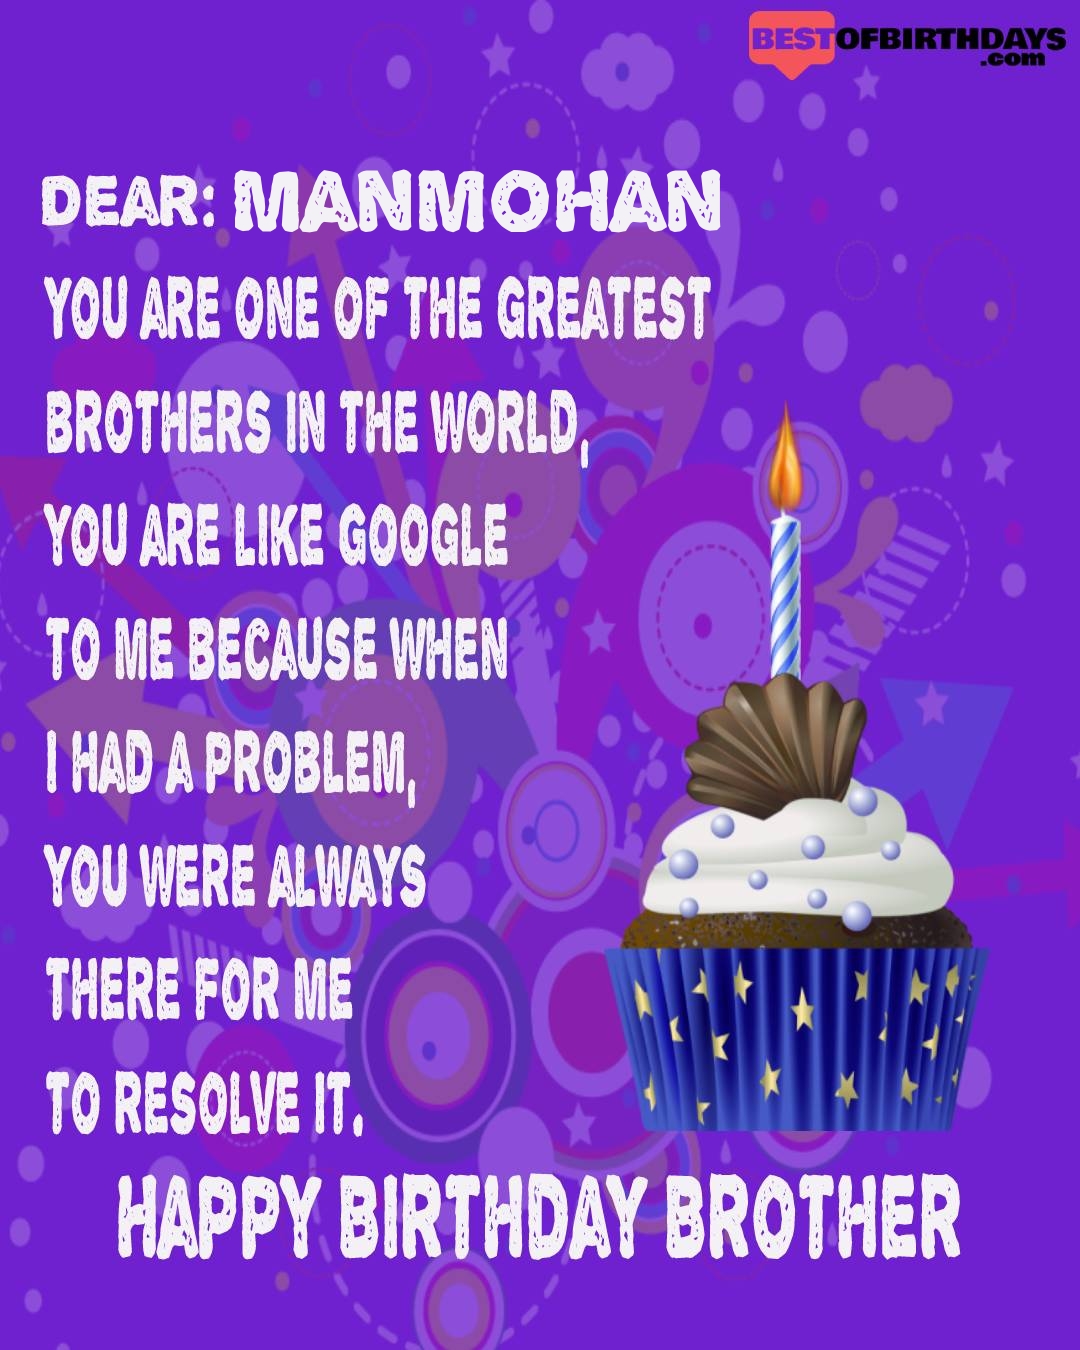 Happy birthday manmohan bhai brother bro